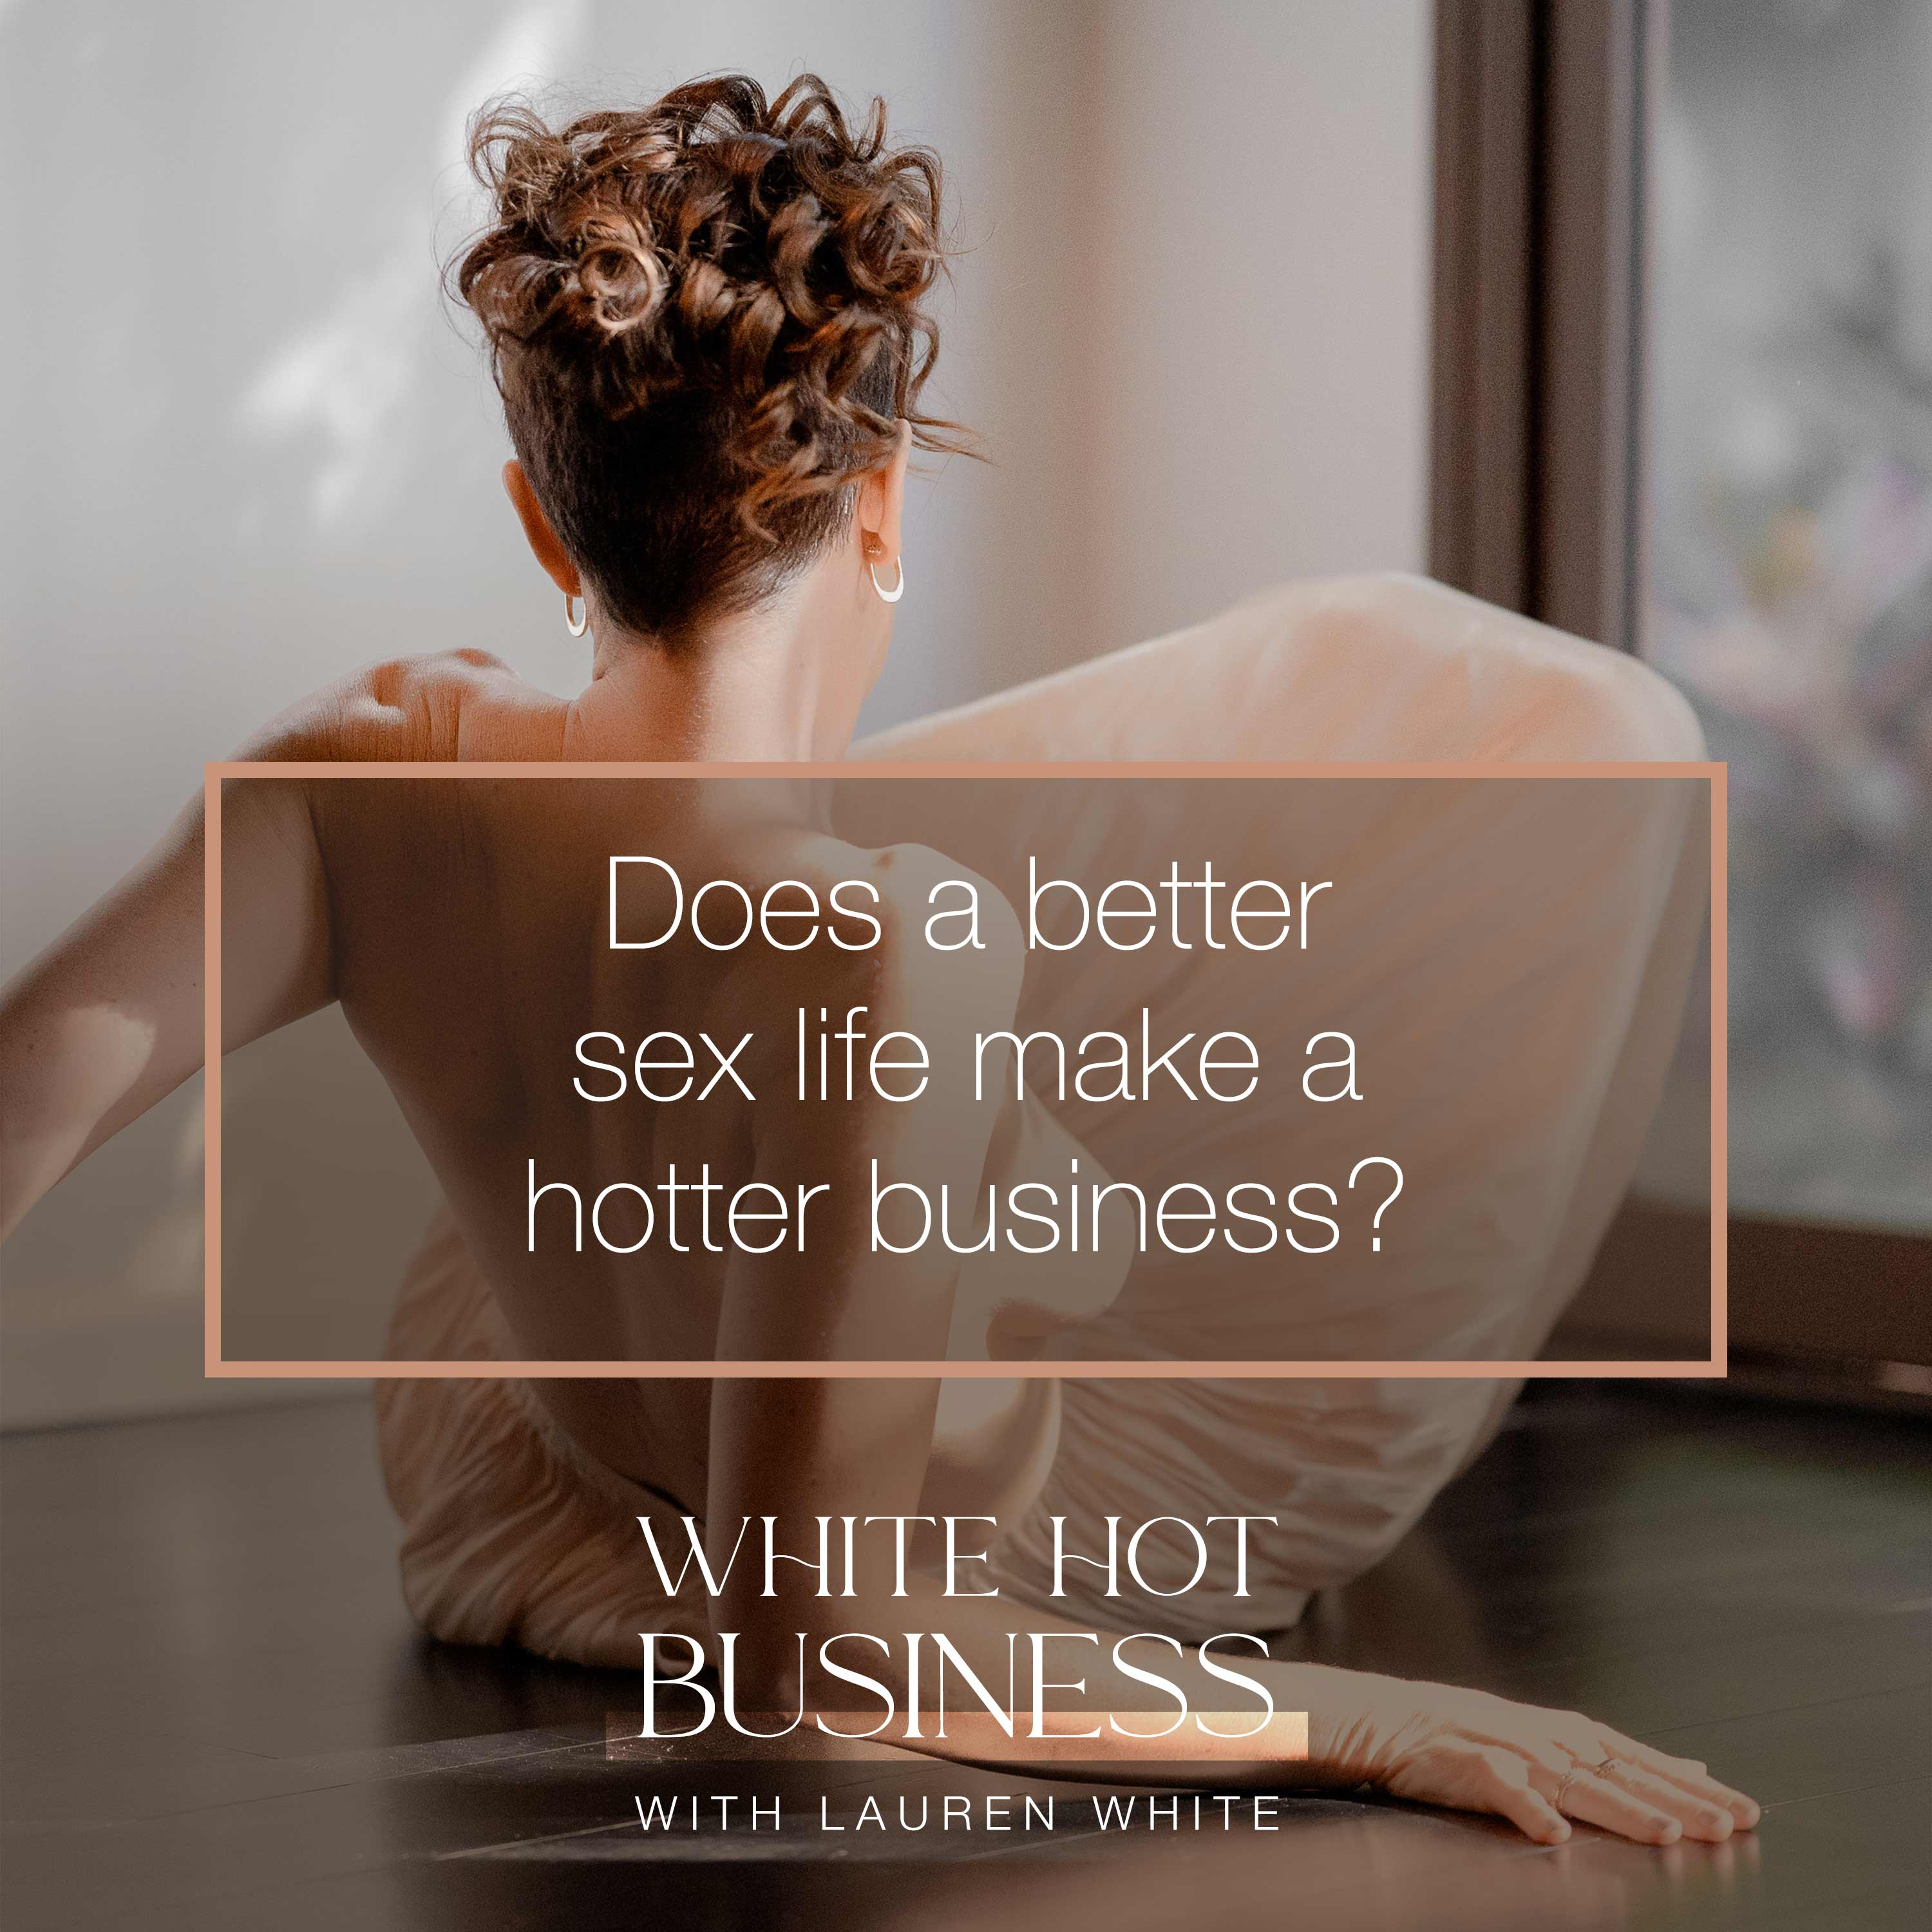 Does a better sex life make a hotter business?